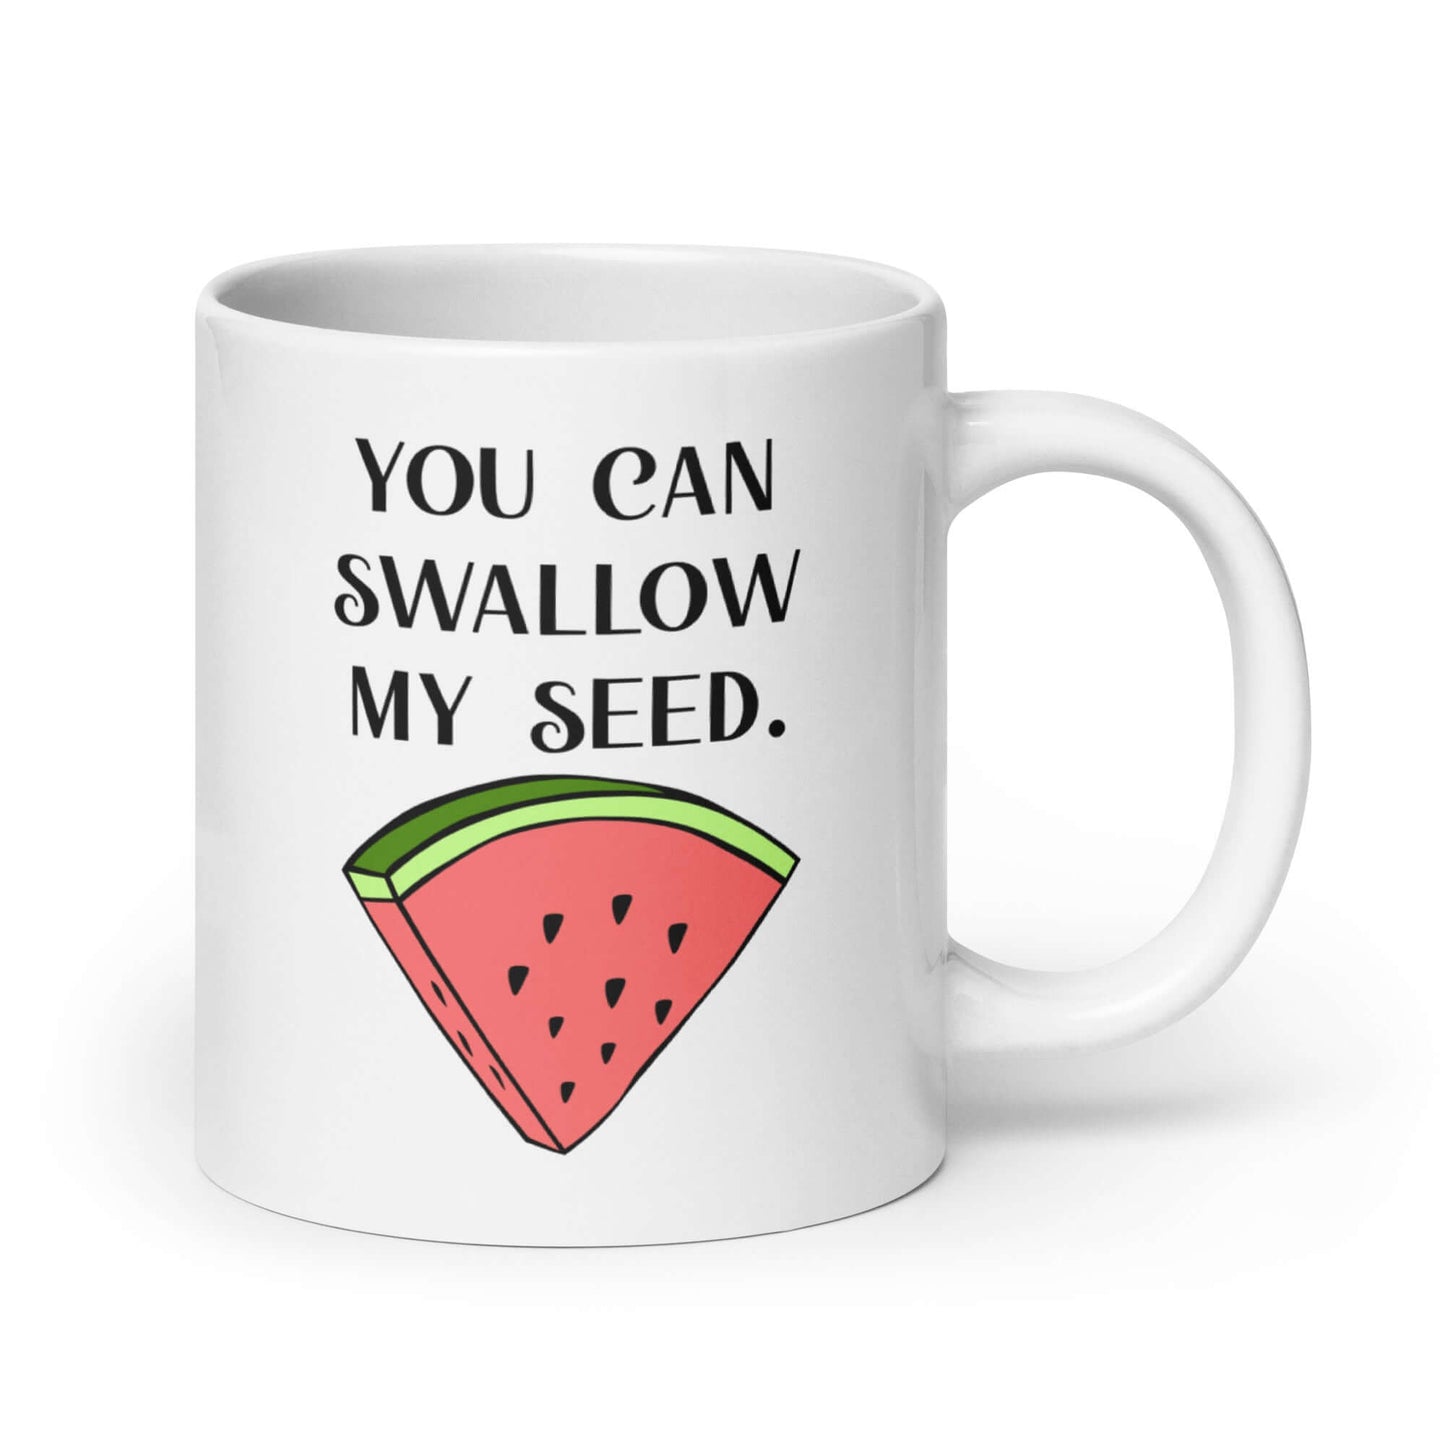 You can swallow my seed funny sexual humor watermelon joke mug